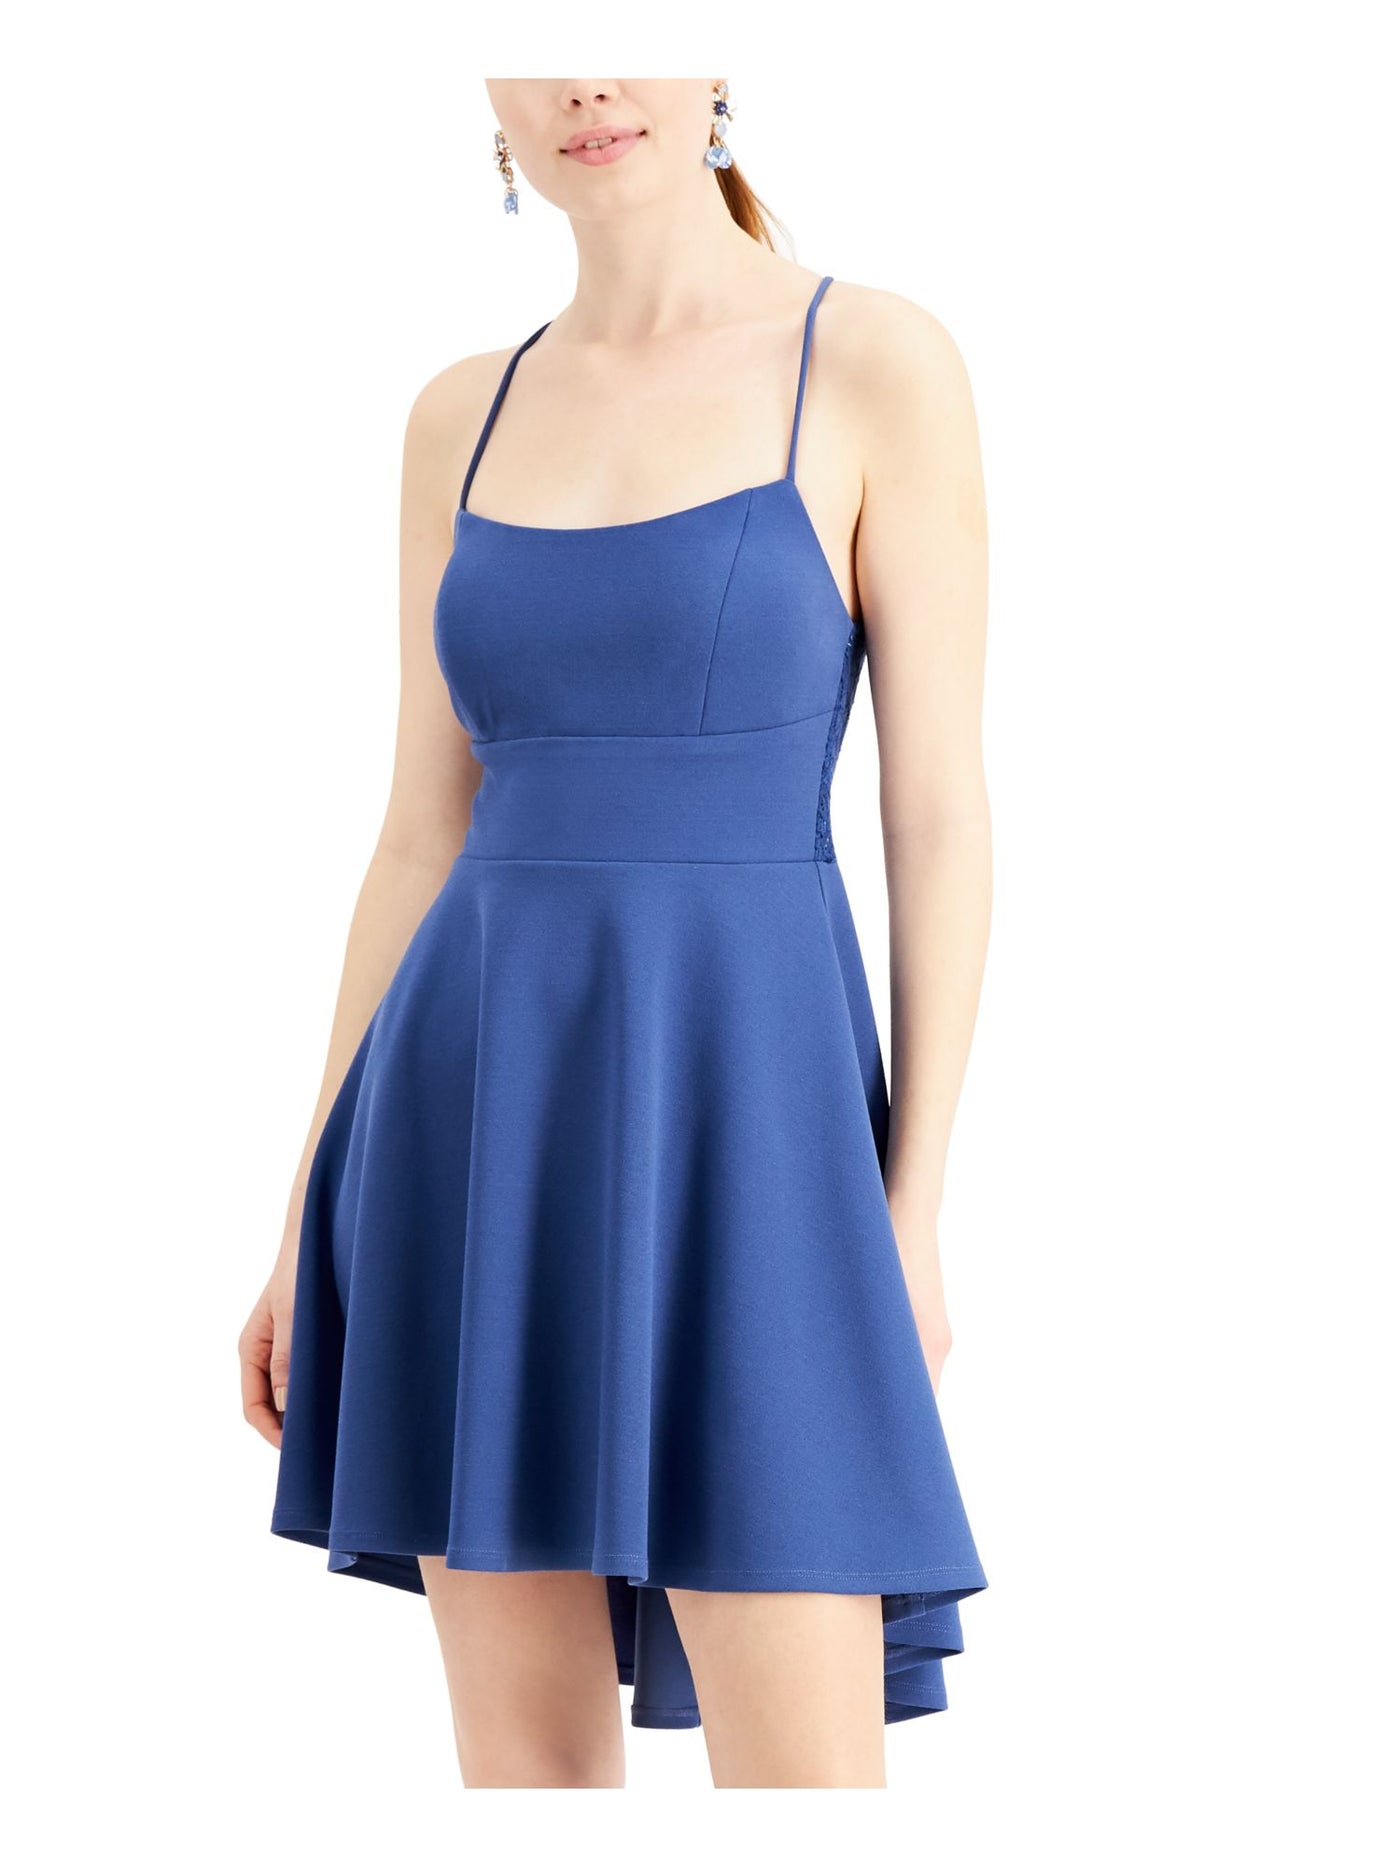 CITY STUDIO Womens Blue Lace Zippered Hi-lo Spaghetti Strap Scoop Neck Mini Party Fit + Flare Dress Juniors 7